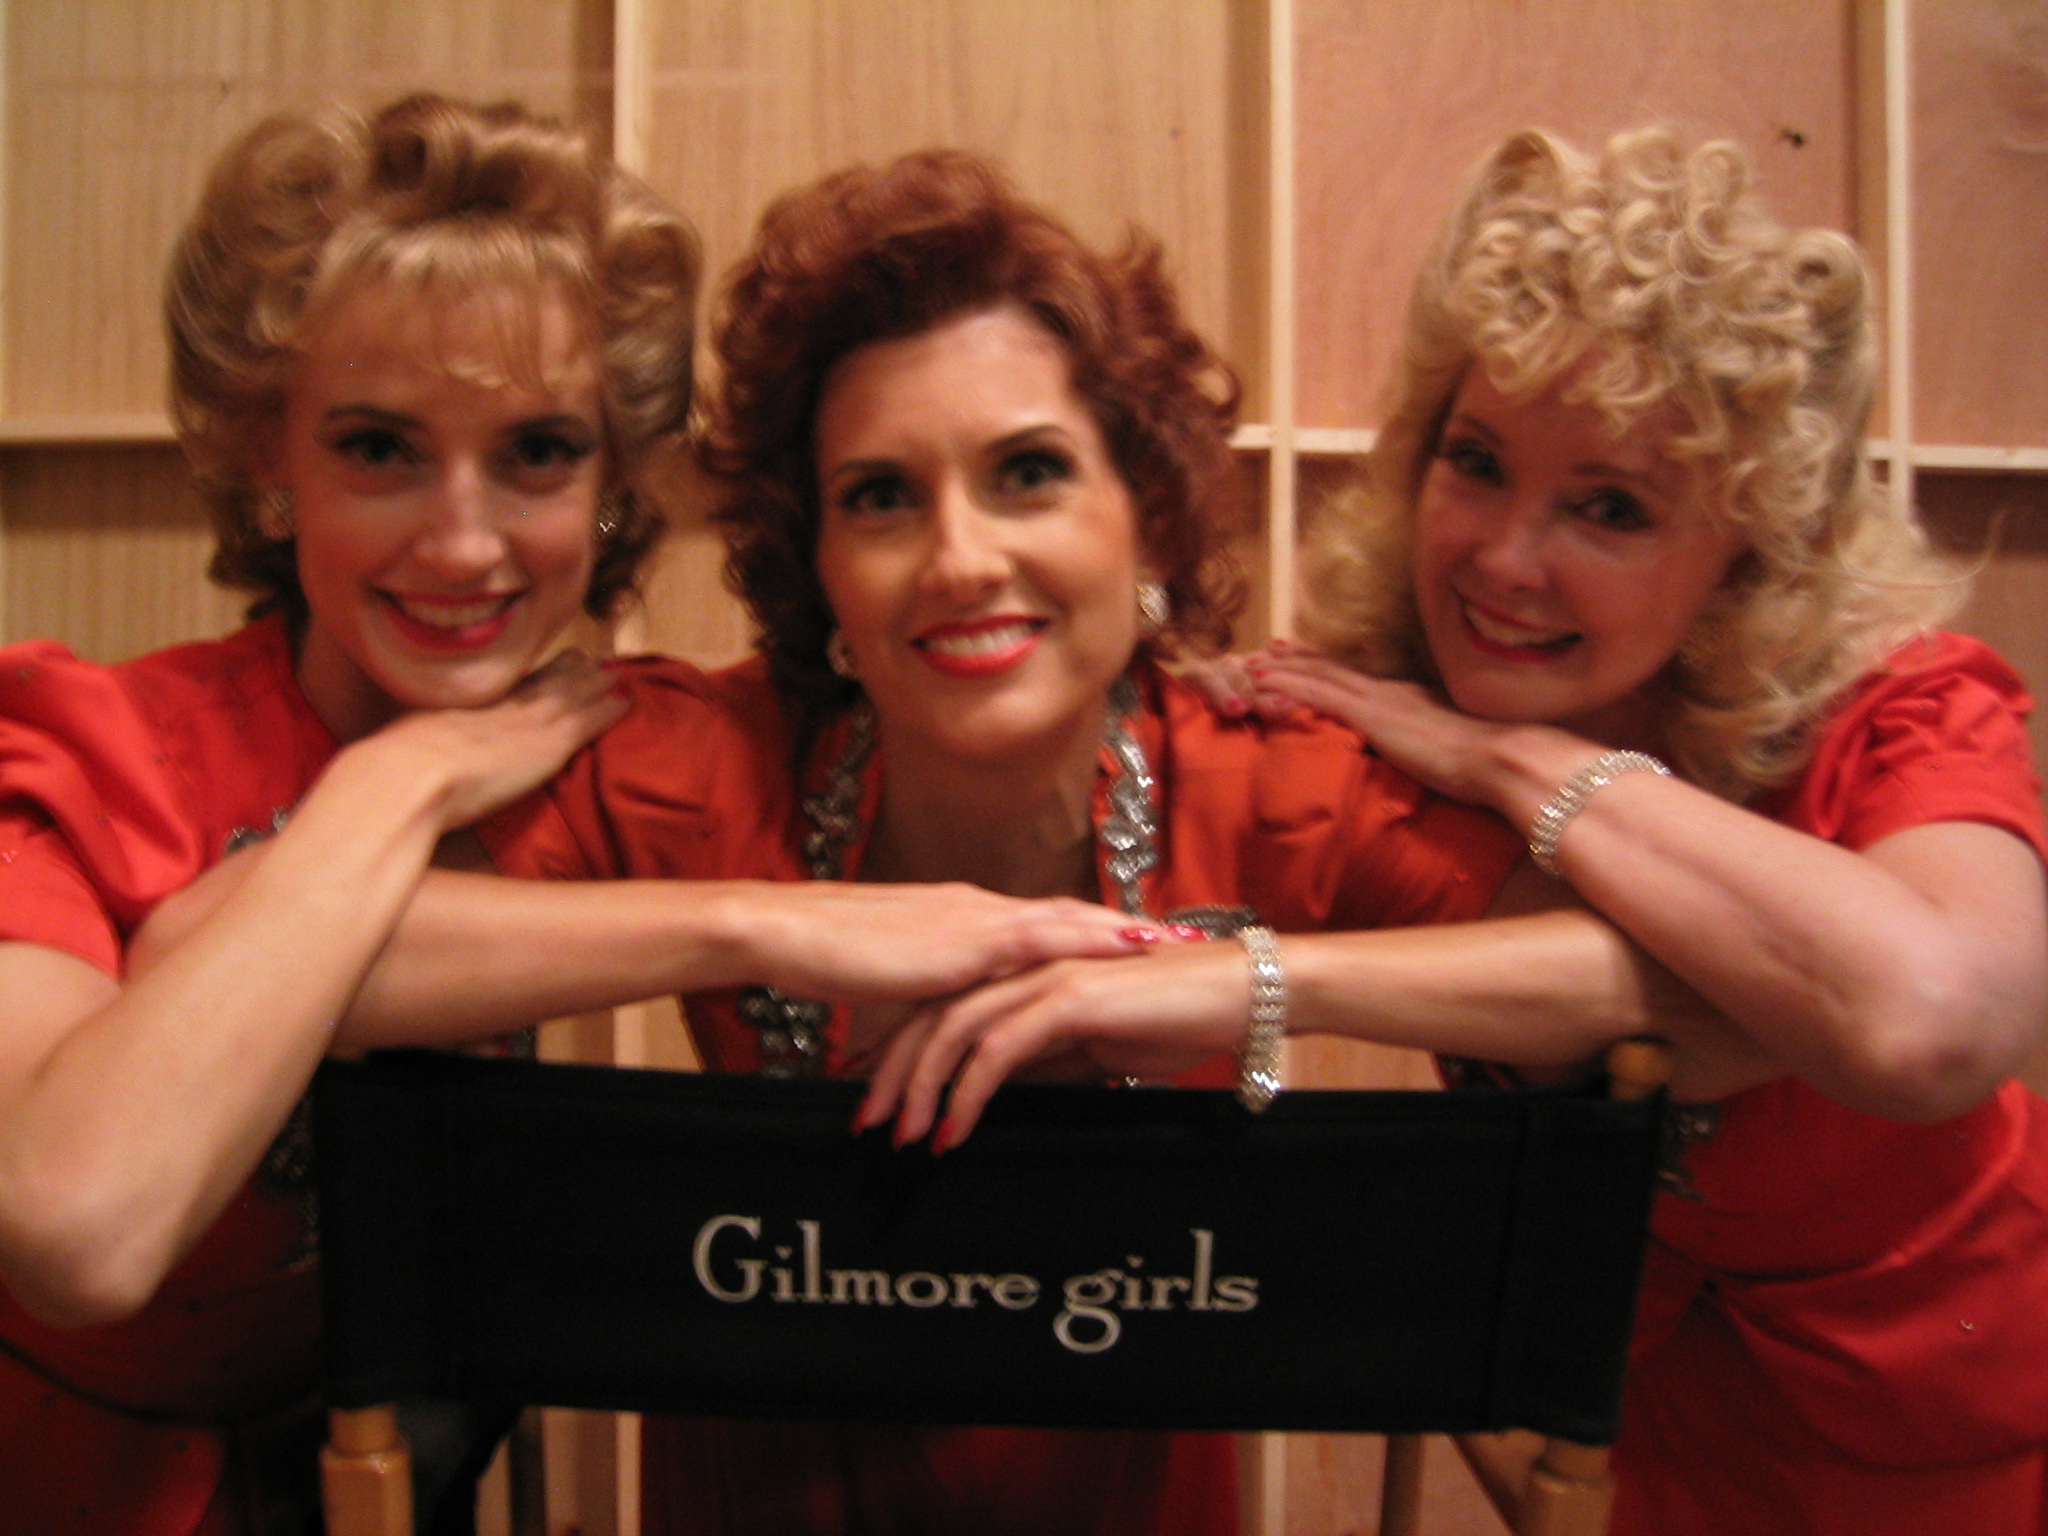 The Swing Dolls on set of "Gilmore Girls"